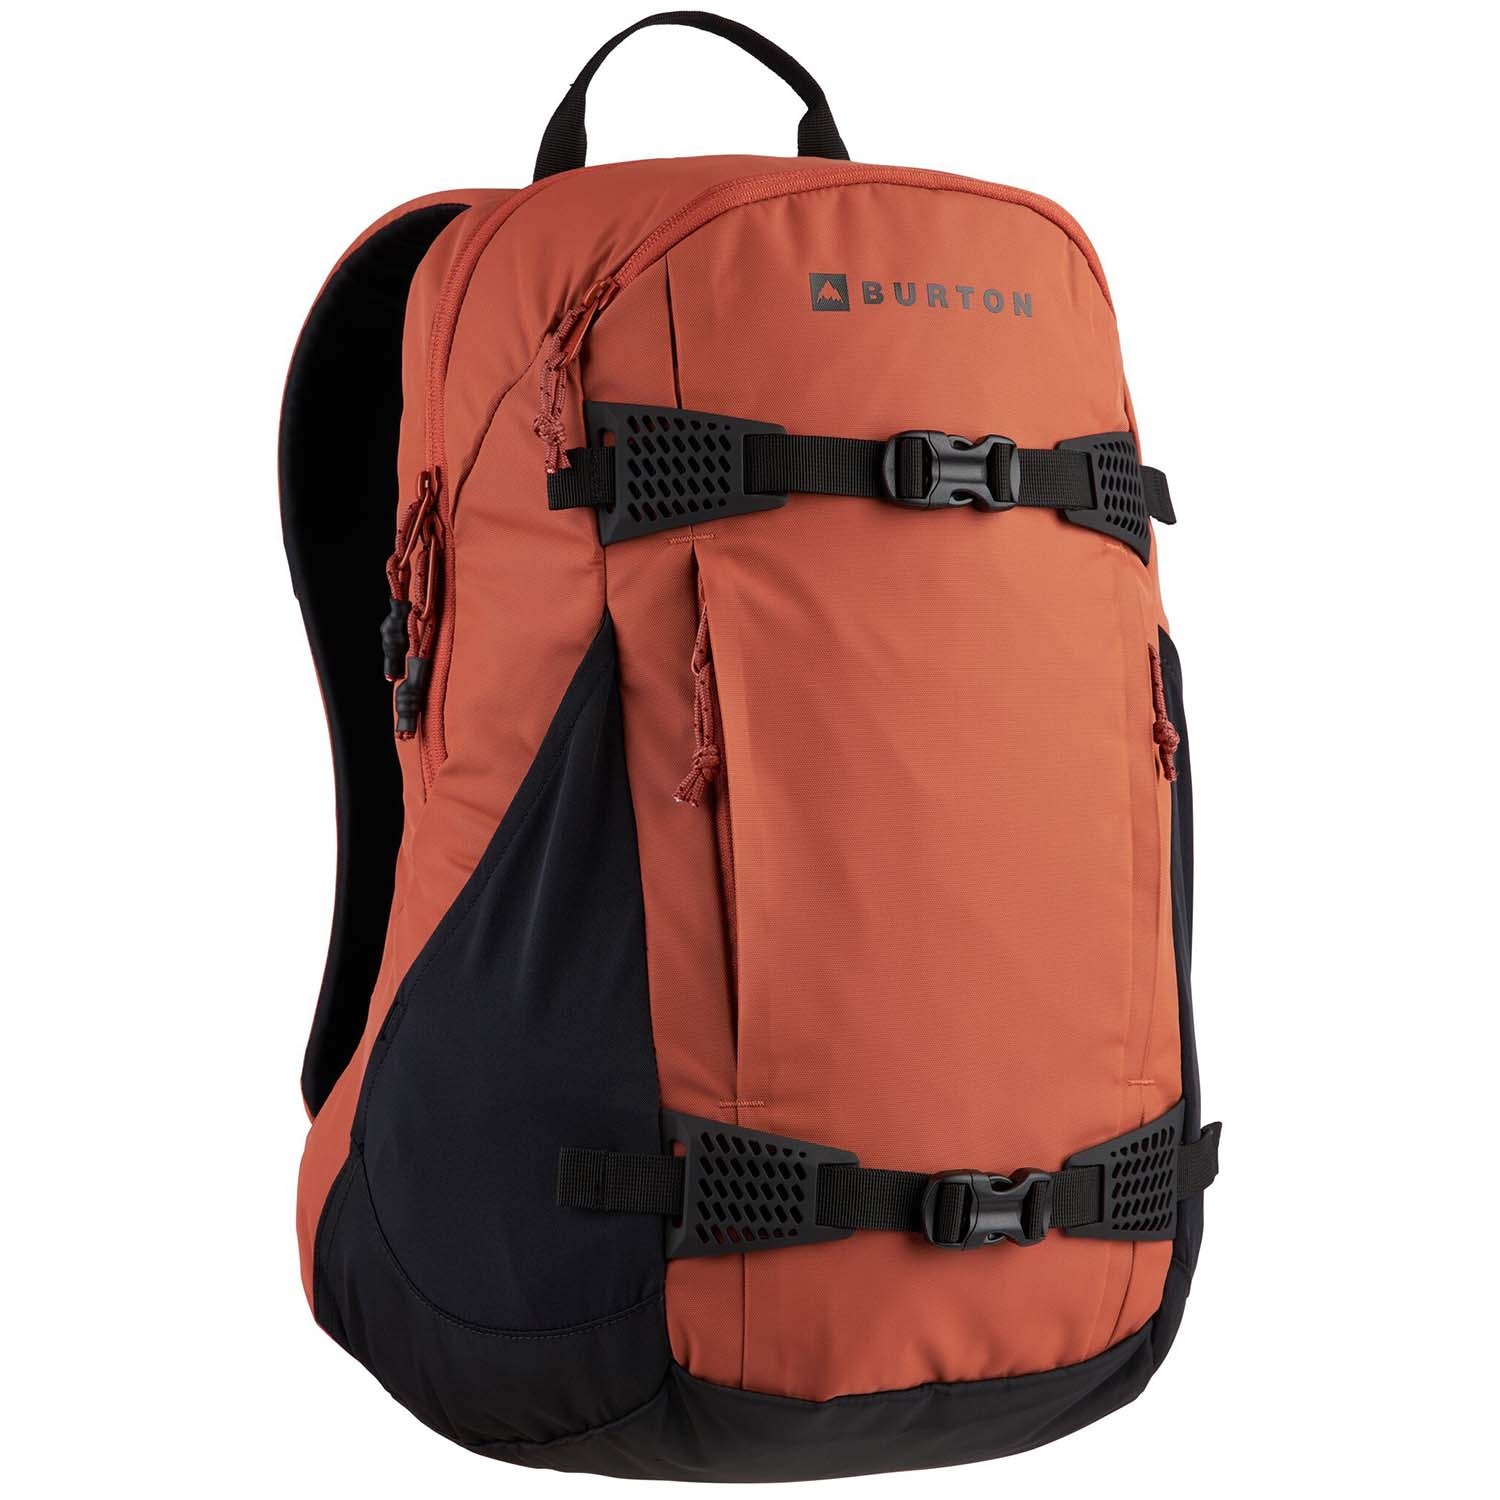 Dosering markering nerveus worden Burton Day Hiker 25L Backpack | evo